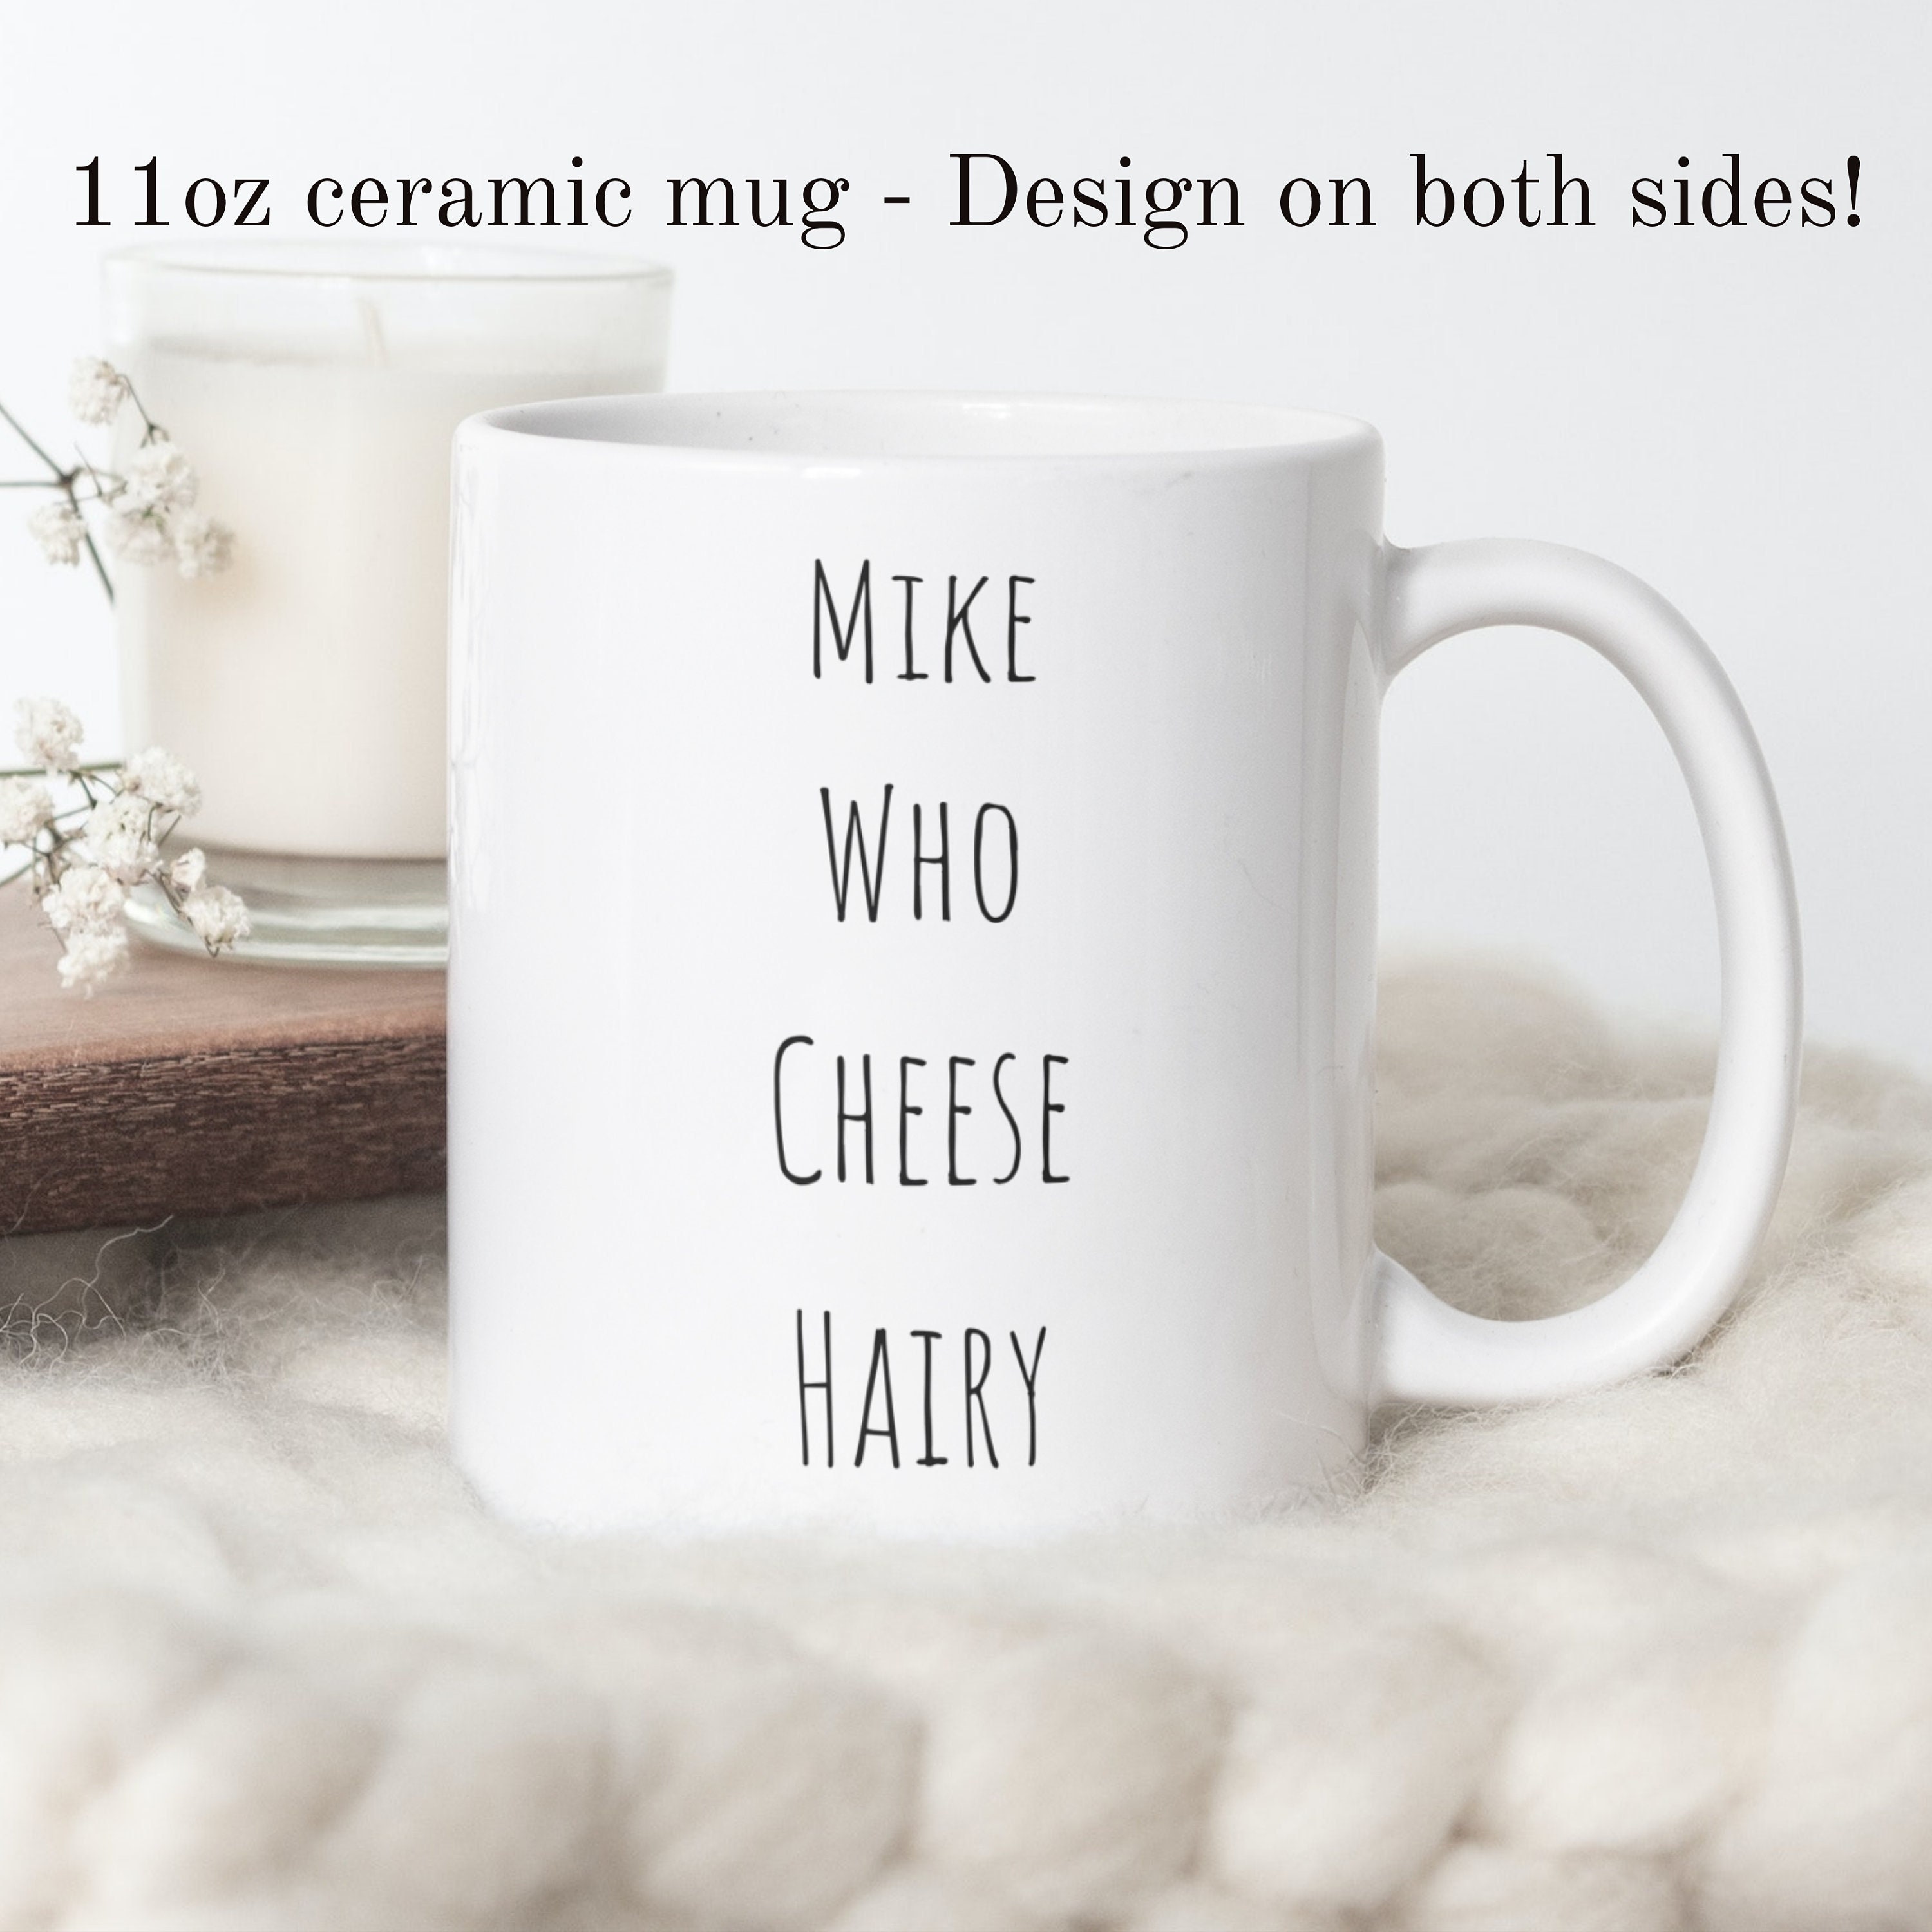 Can't Adult Today Two-toned Coffee Mug or Tea Cup, Travel Mug Adulting,  Birthday Coffee Mug, Coffee Mug 18th Birthday, Gift for Coworker 